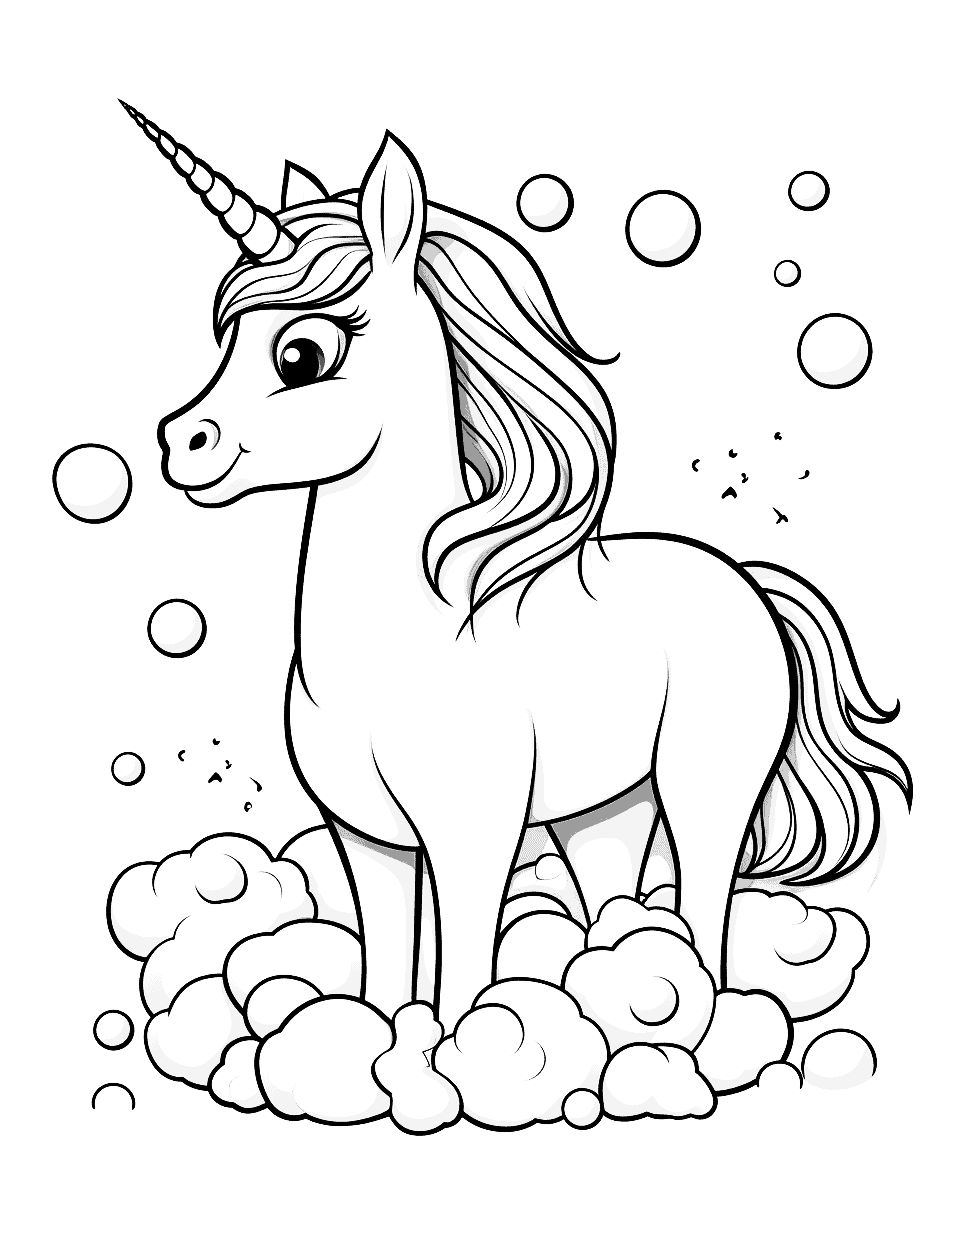 Unicorn Having a Bubble Bath Coloring Page - A unicorn enjoying a bubble bath with lots of bubbles.